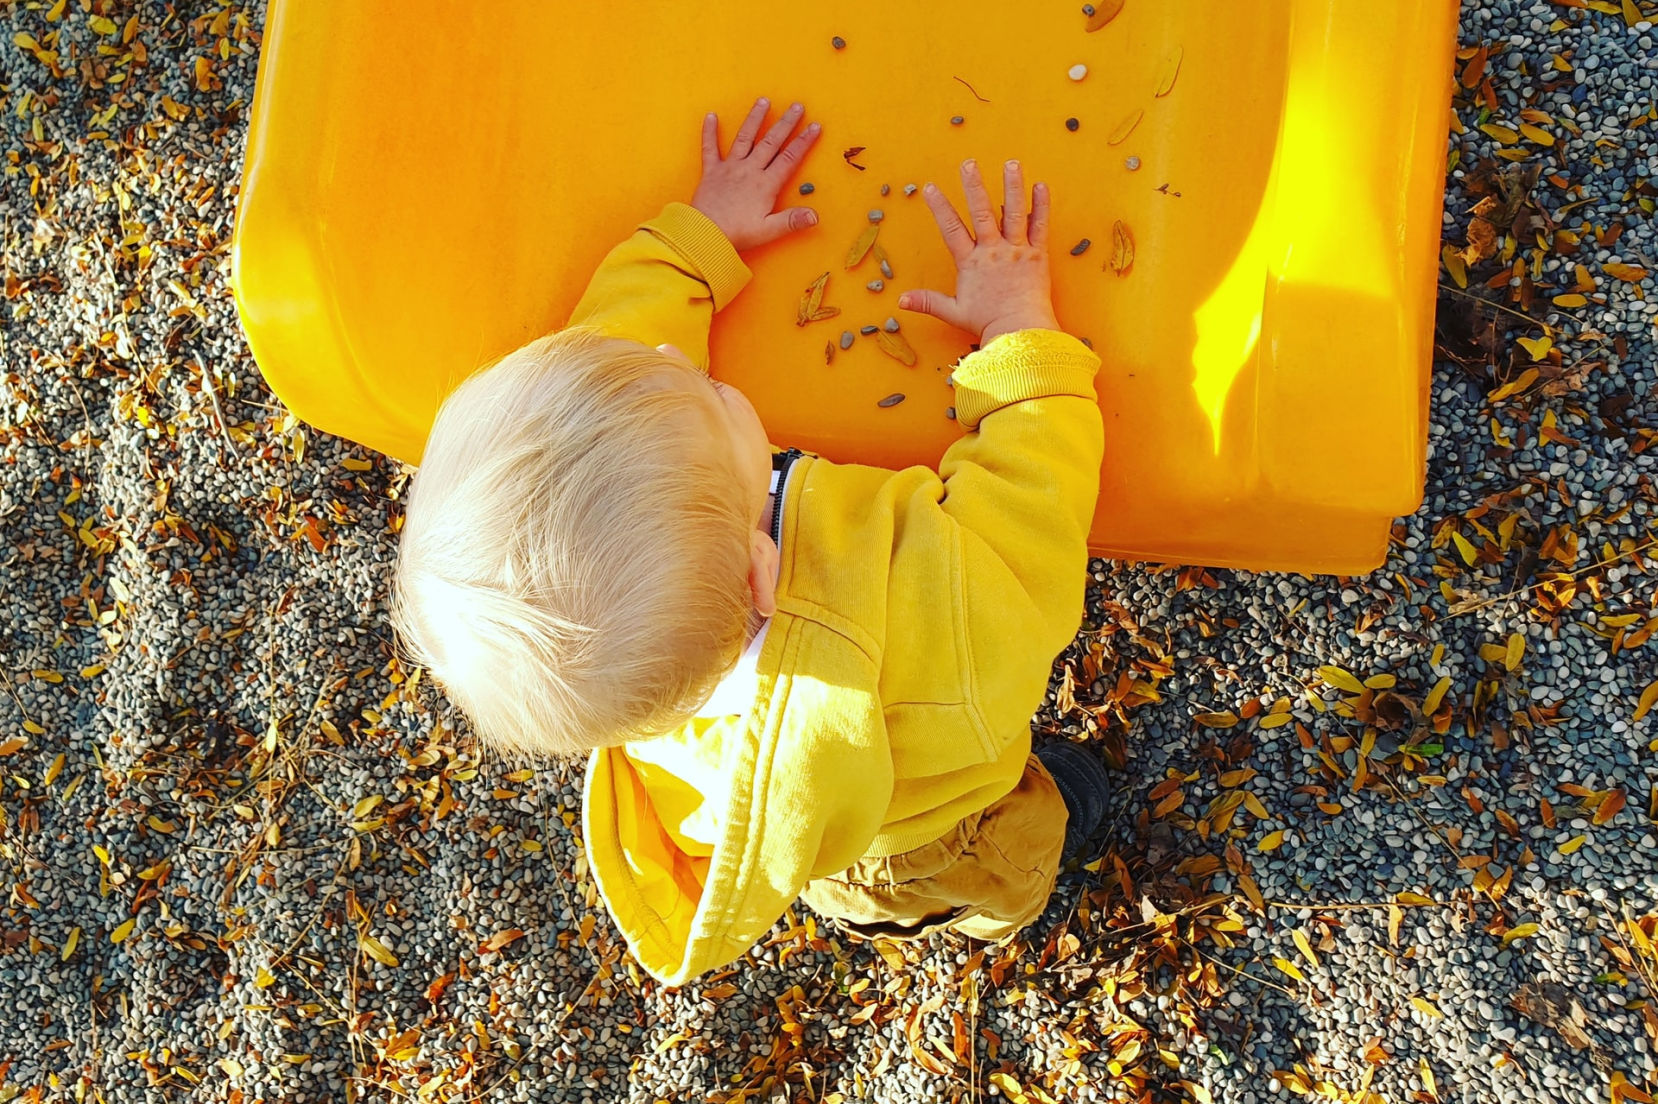 bambino che gioca vicino a uno scivolo giallo